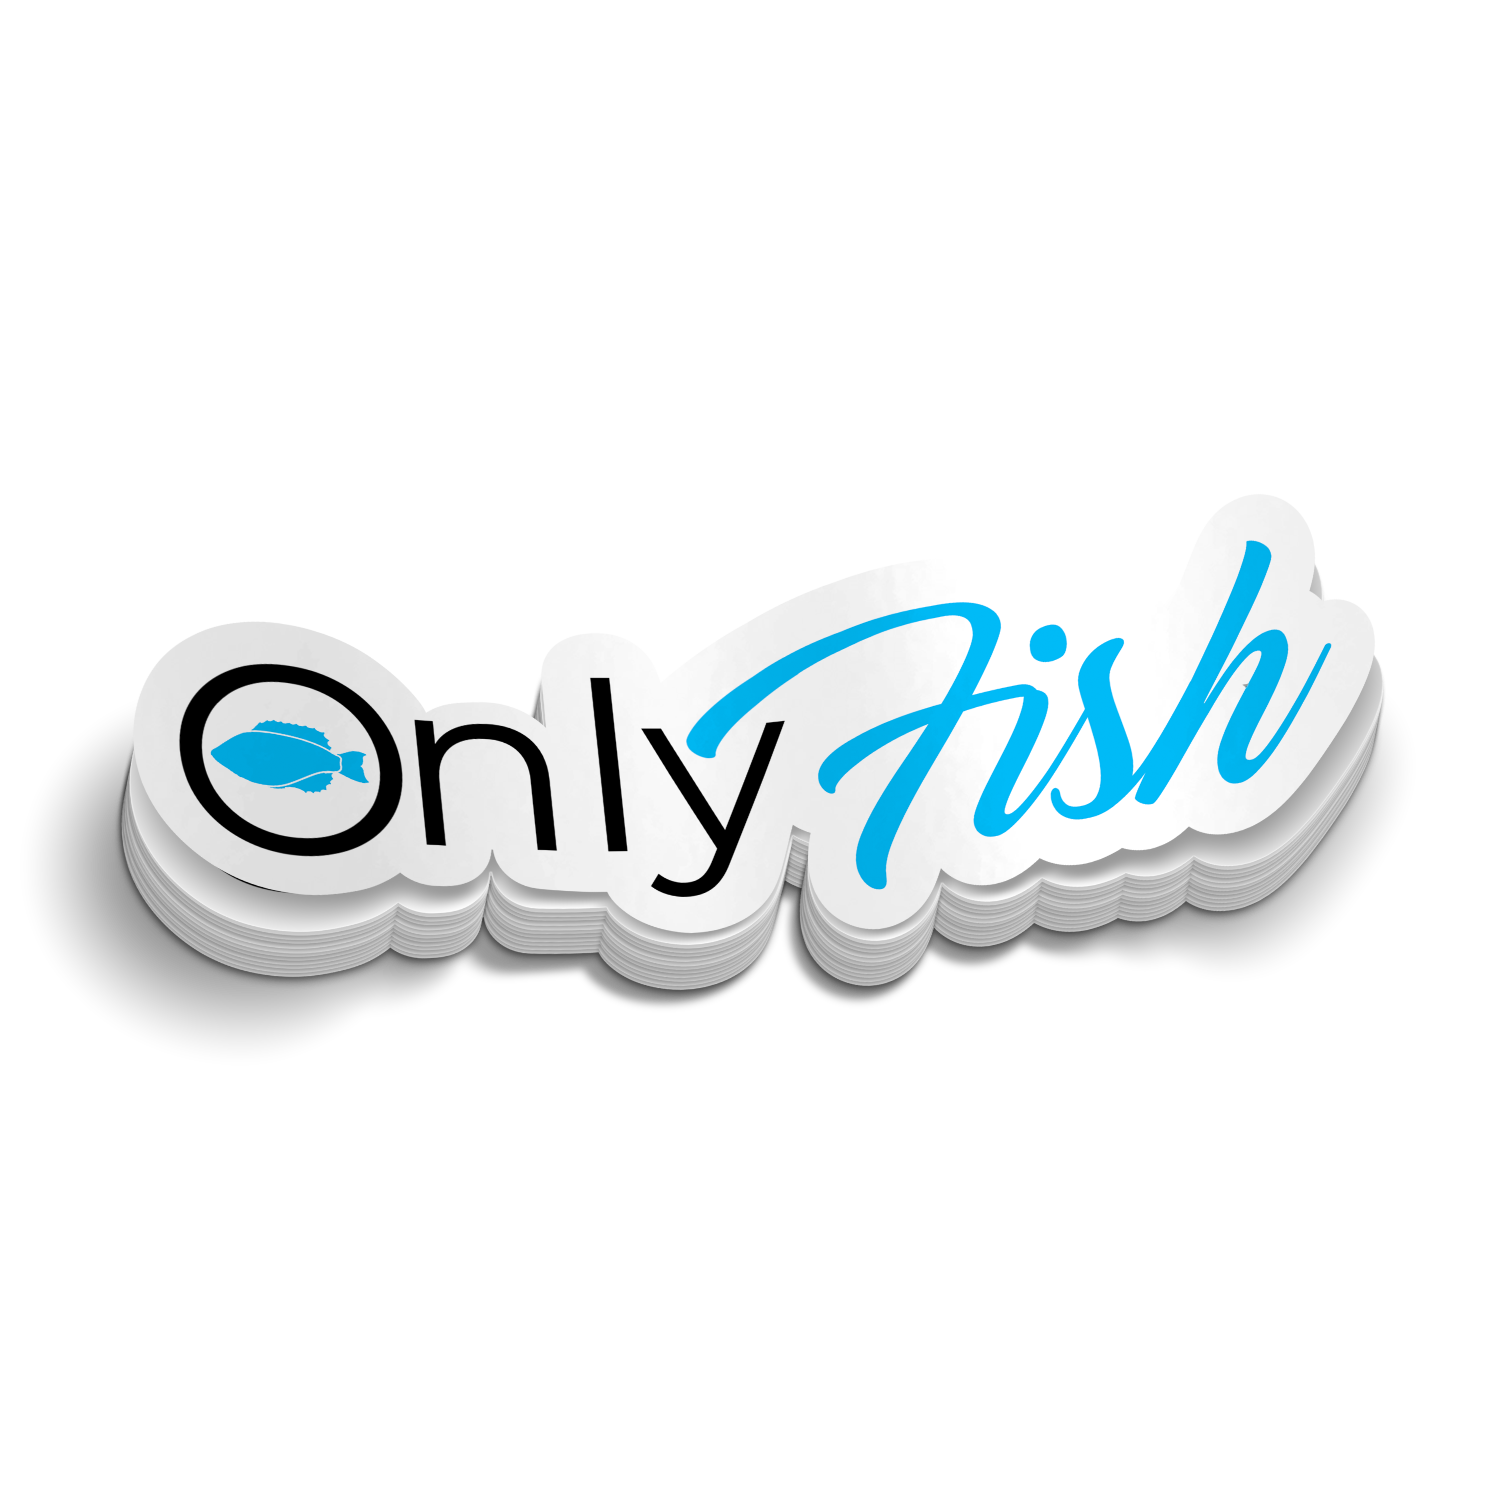 Fish Naked - Funny Fishing Sticker